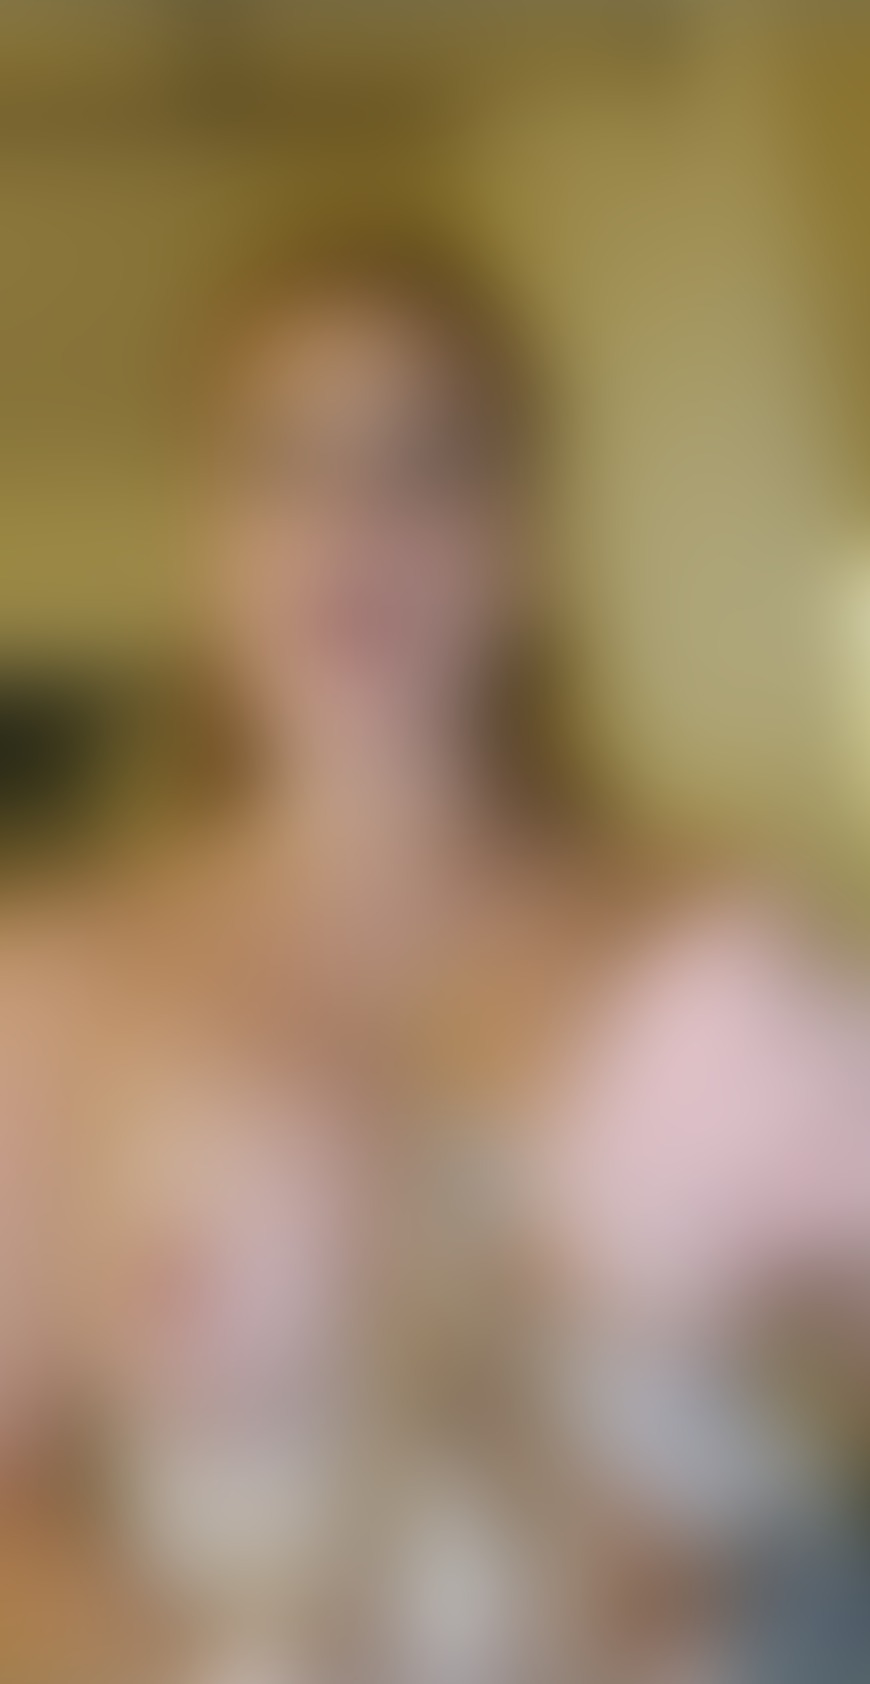 More 420 vids. I love smoking naked 😋 hbu? - post hidden image